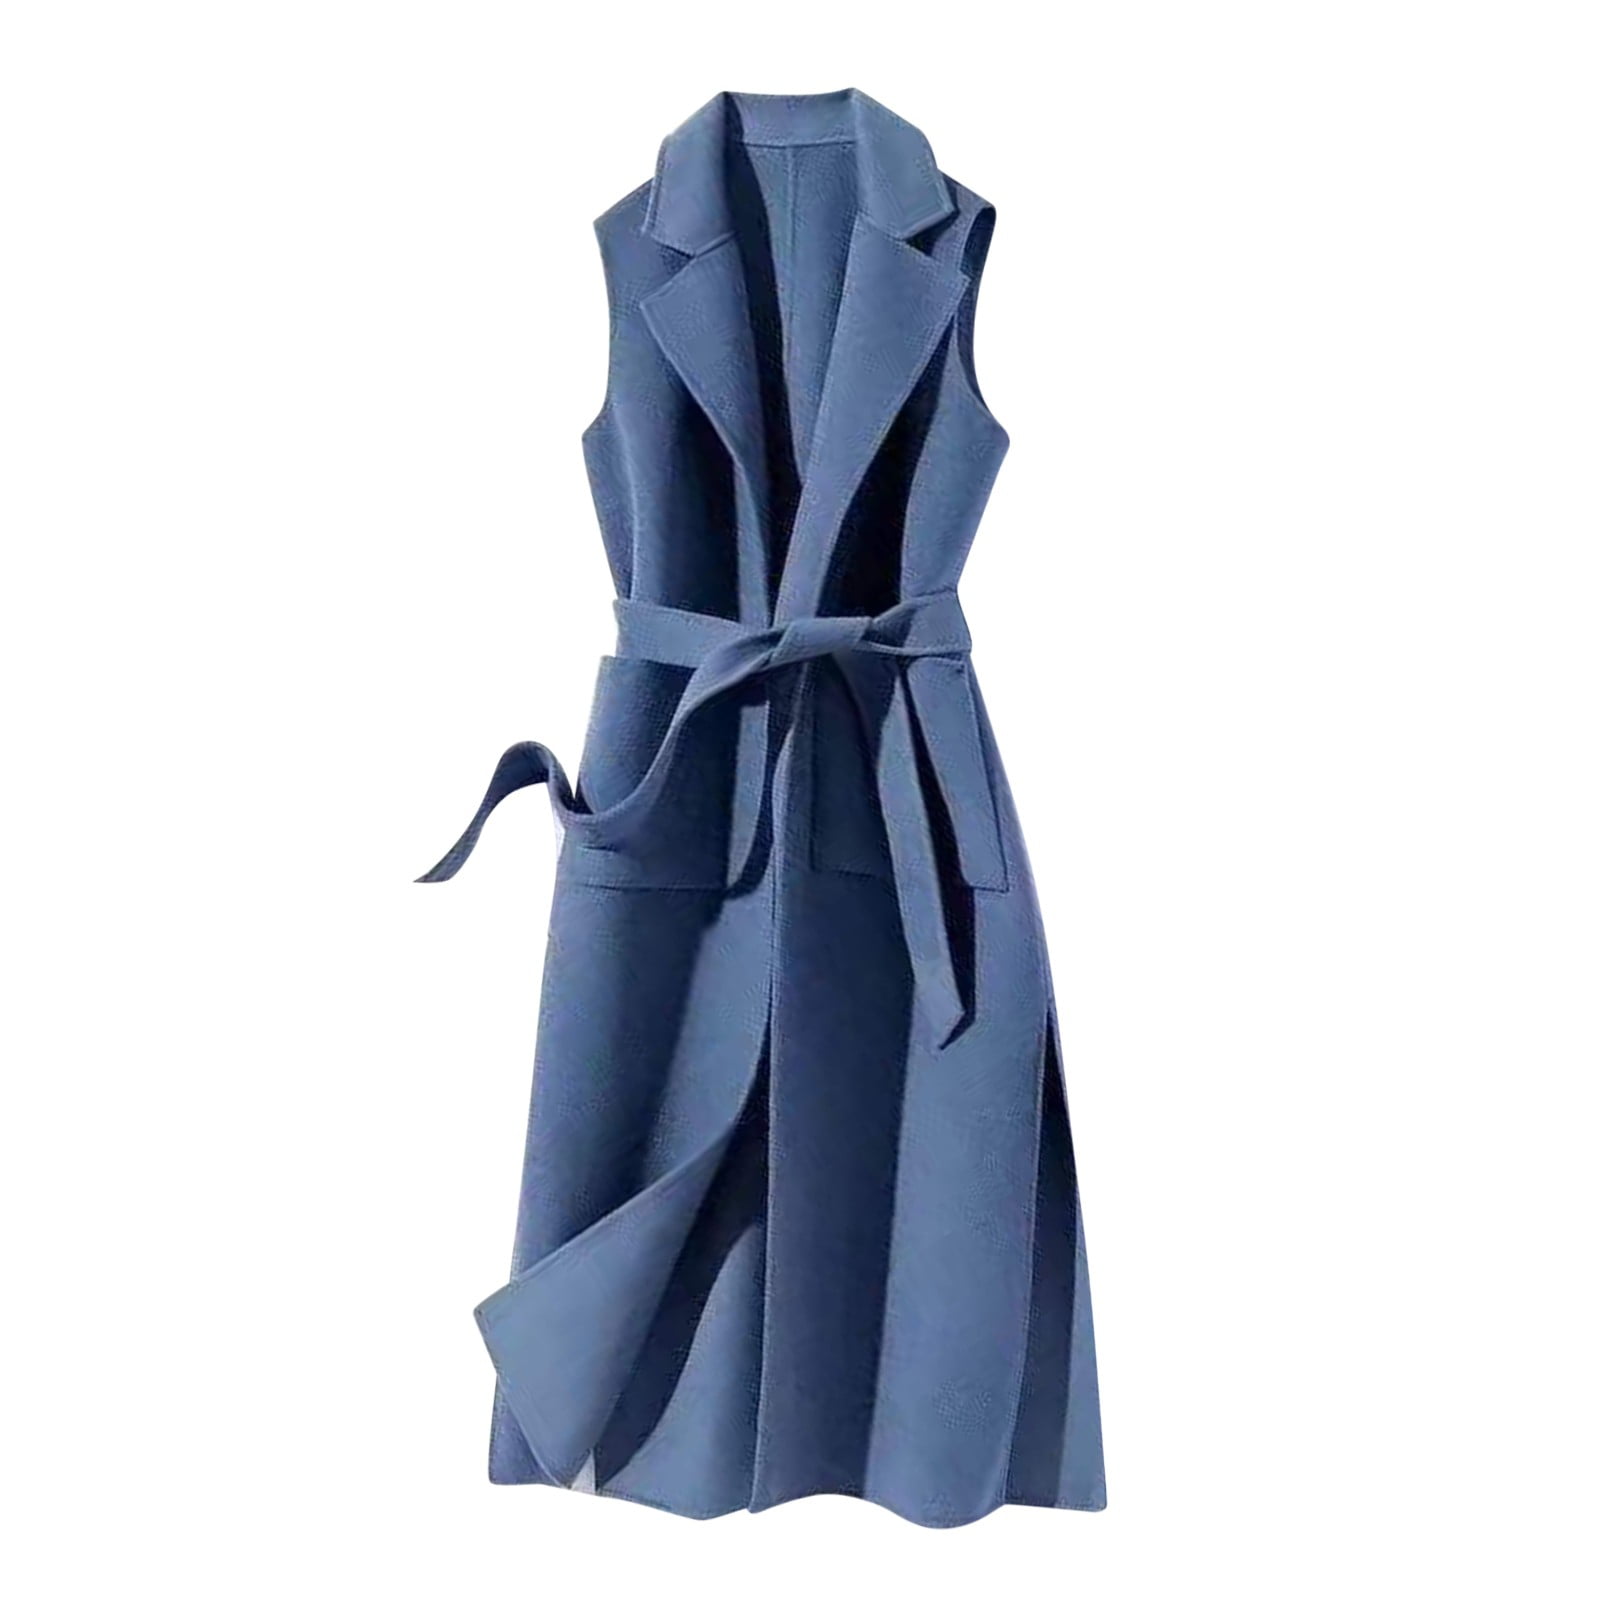 Baocc Wool Blend Coat Women\'s Autumn and Winter Vest Woolen Solid Color  Strap Personality Long Vest Jacket,Boucle Jackets for Women Blue